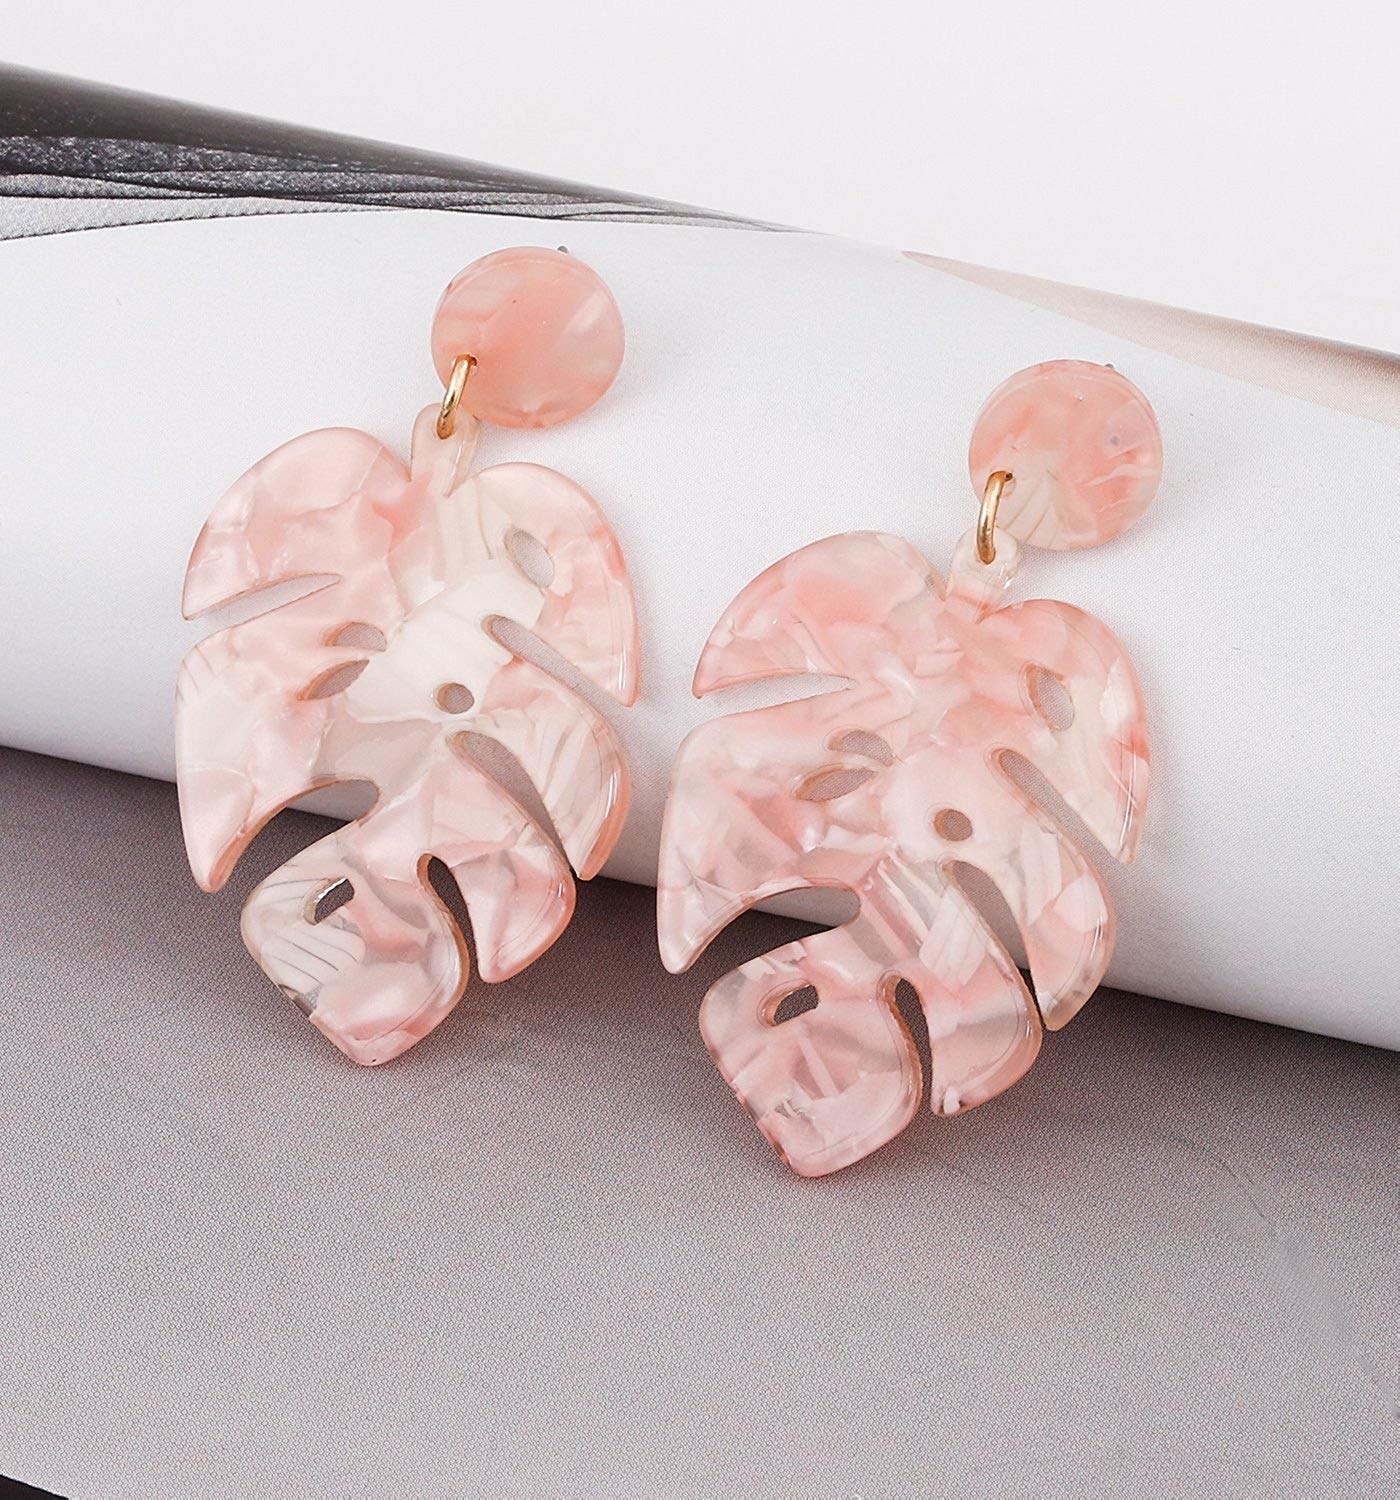 The pink earrings